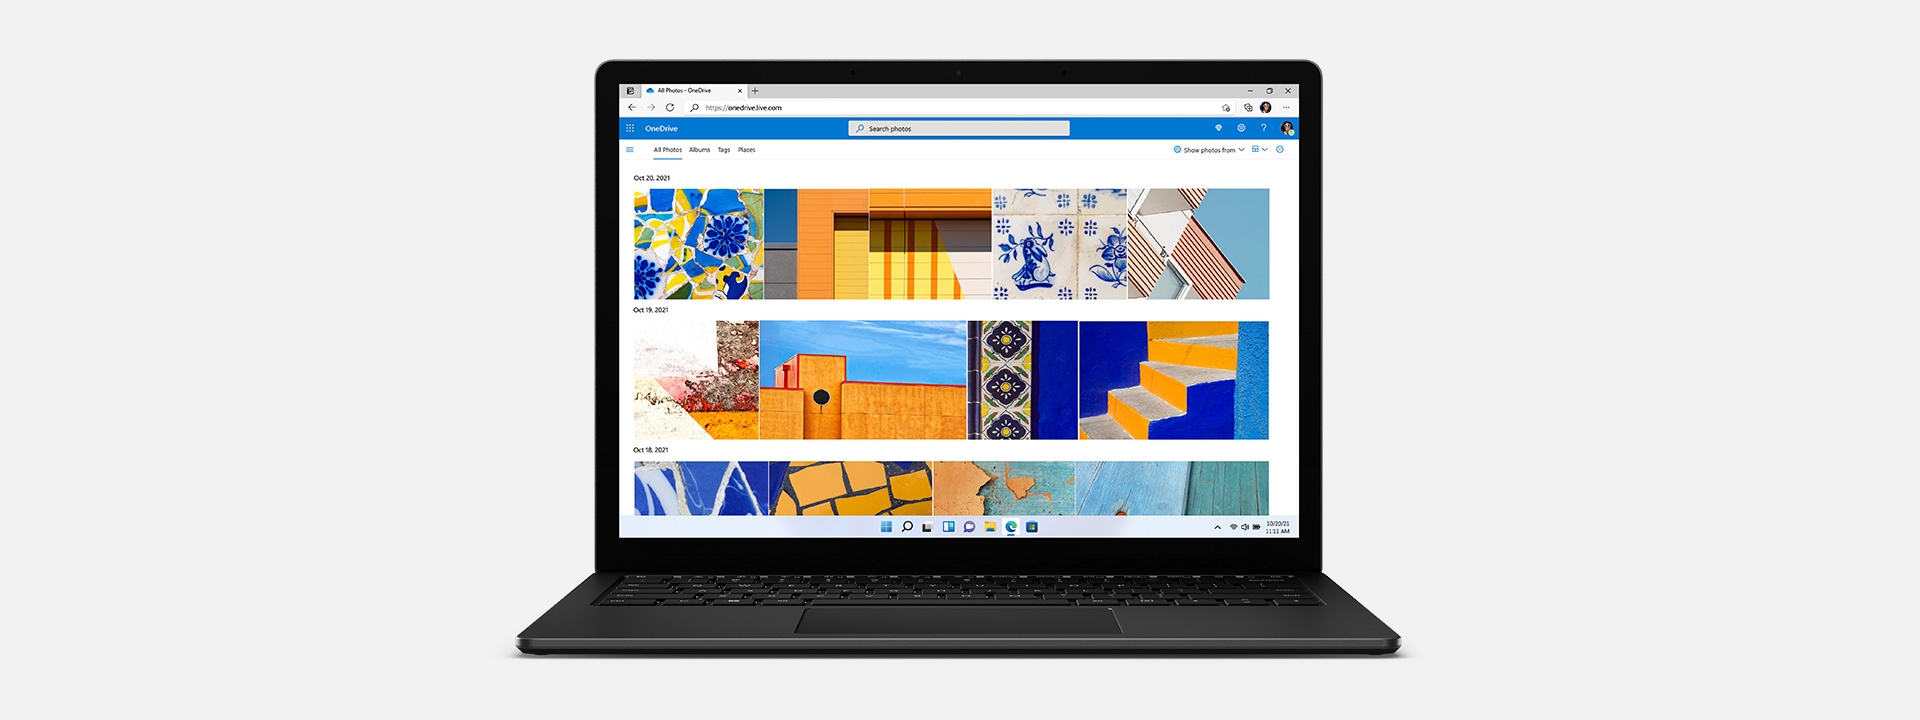 Matsort Surface Laptop 4 set forfra, der viser Microsoft OneDrive